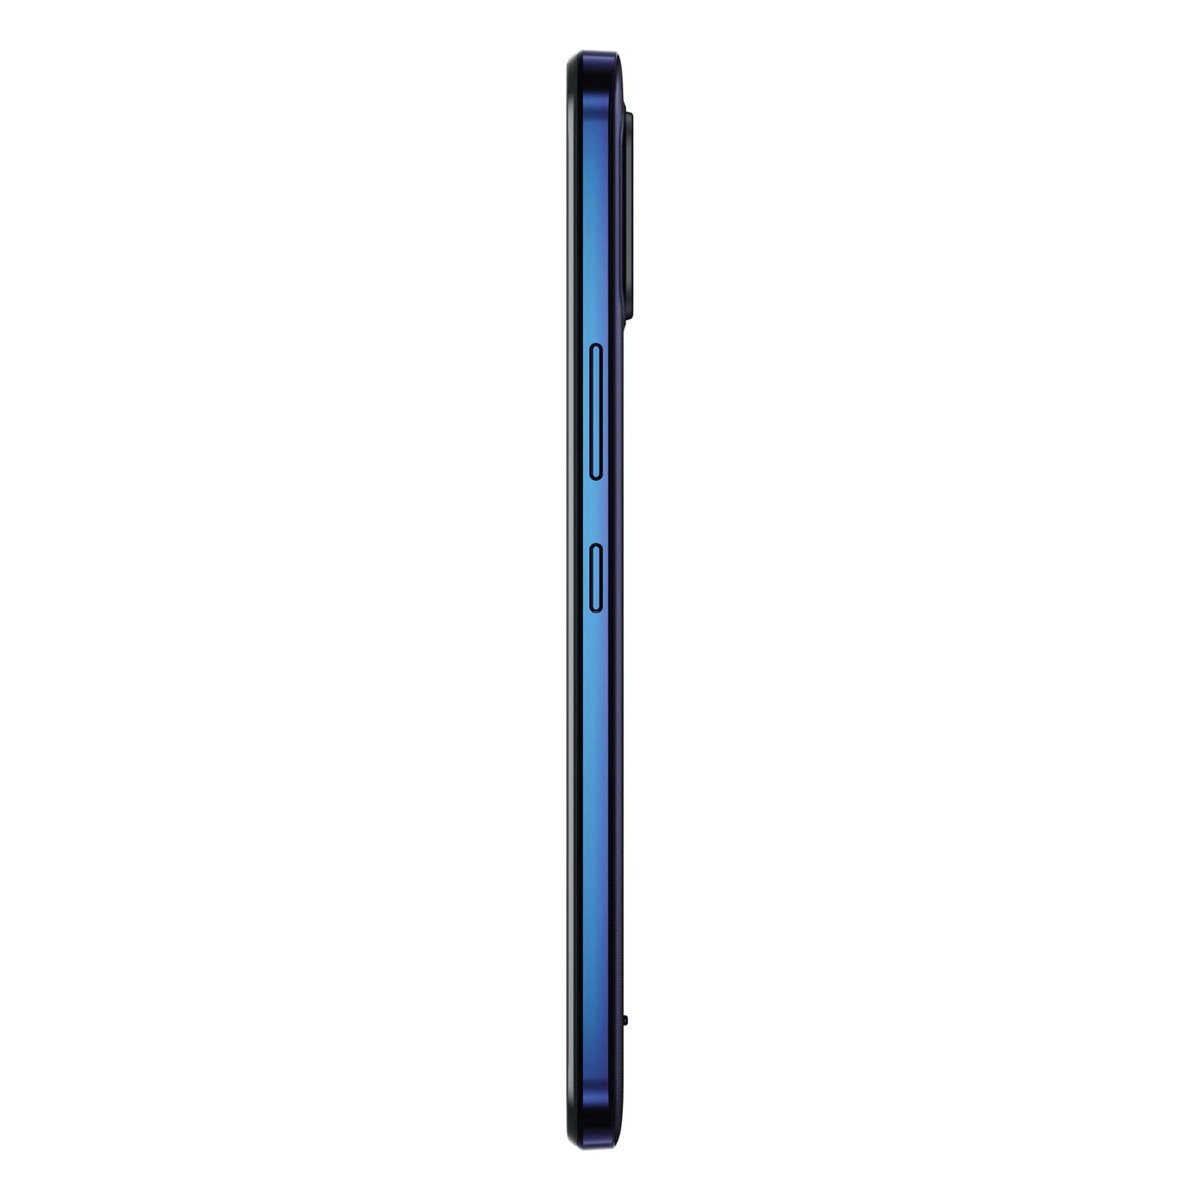 Nokia Mobile G11 Plus 3GB 64GB Blue